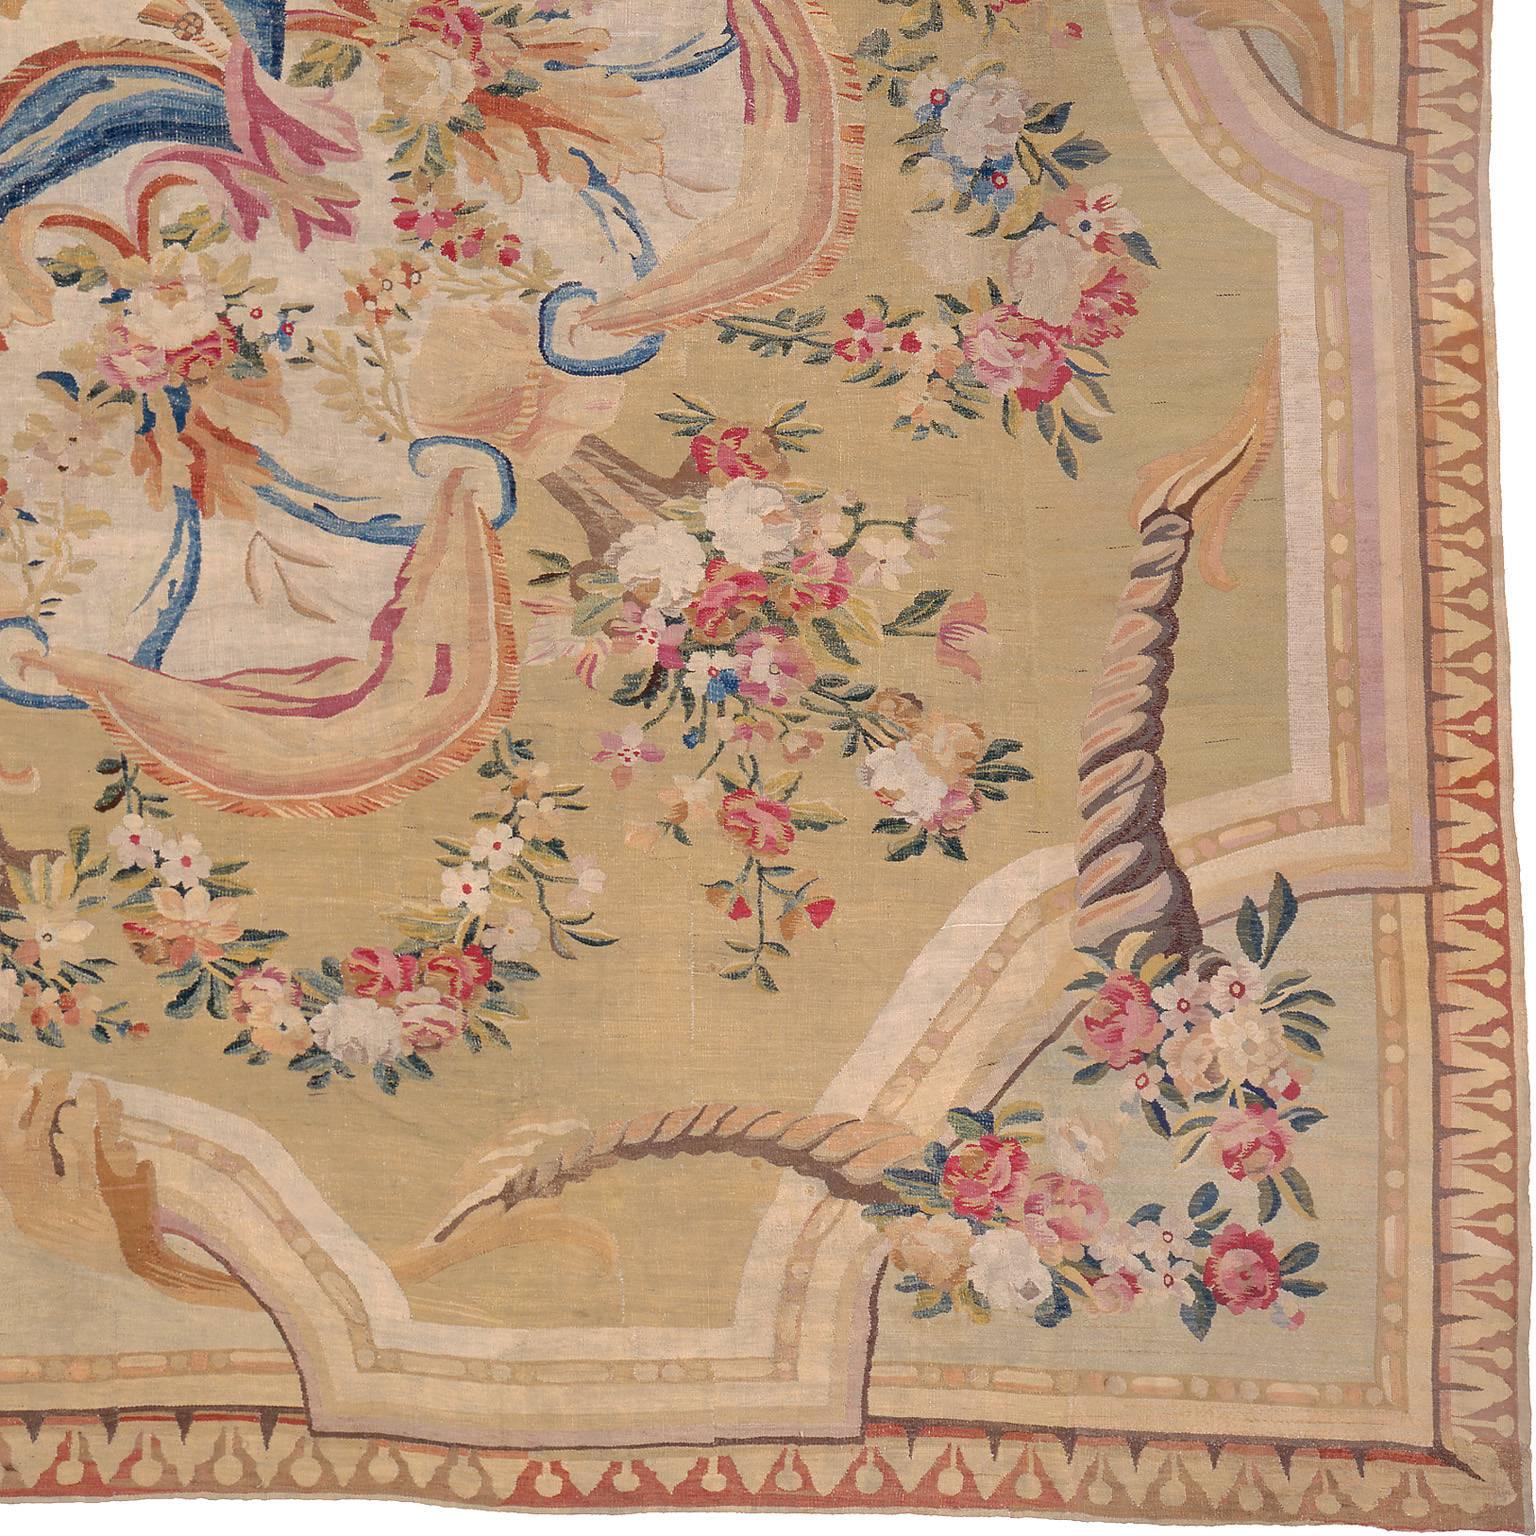 French Aubusson rug, 1770
France, circa 1770
Louis XV period.